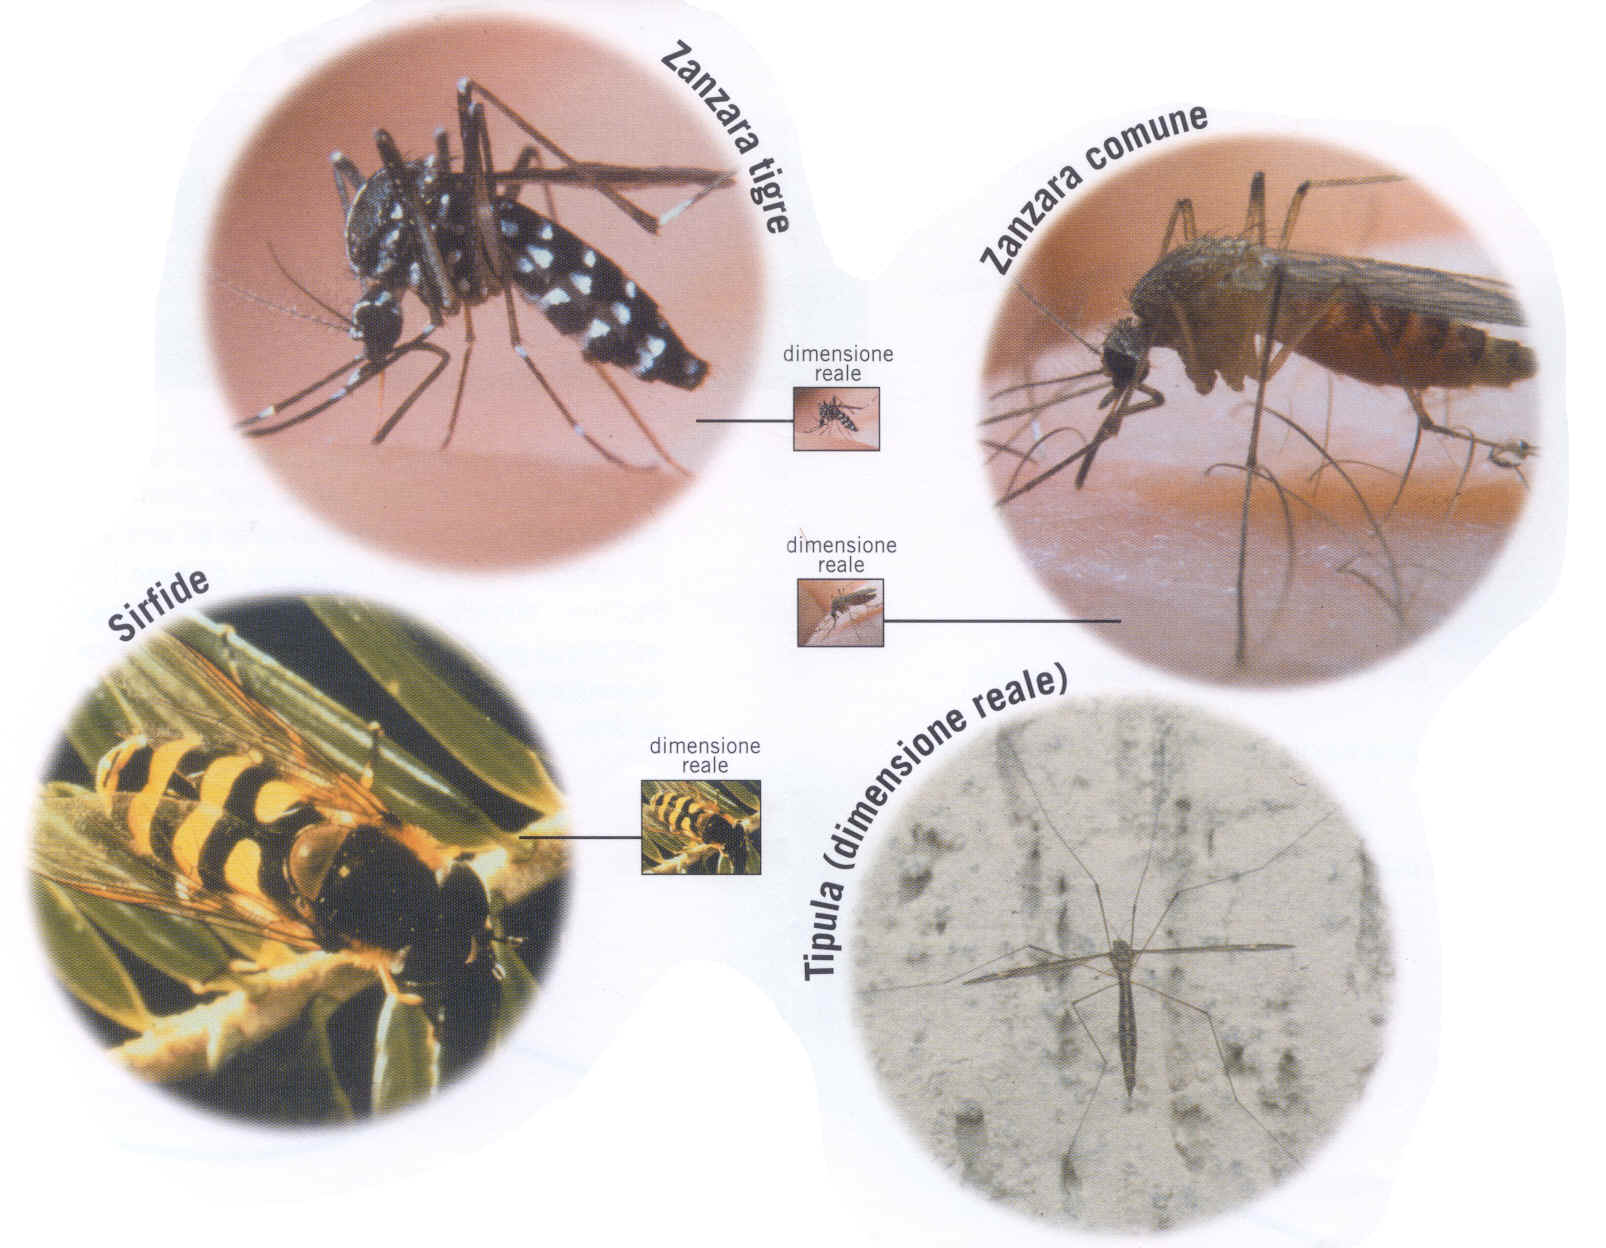 Tigrt mosquito and common mosquito